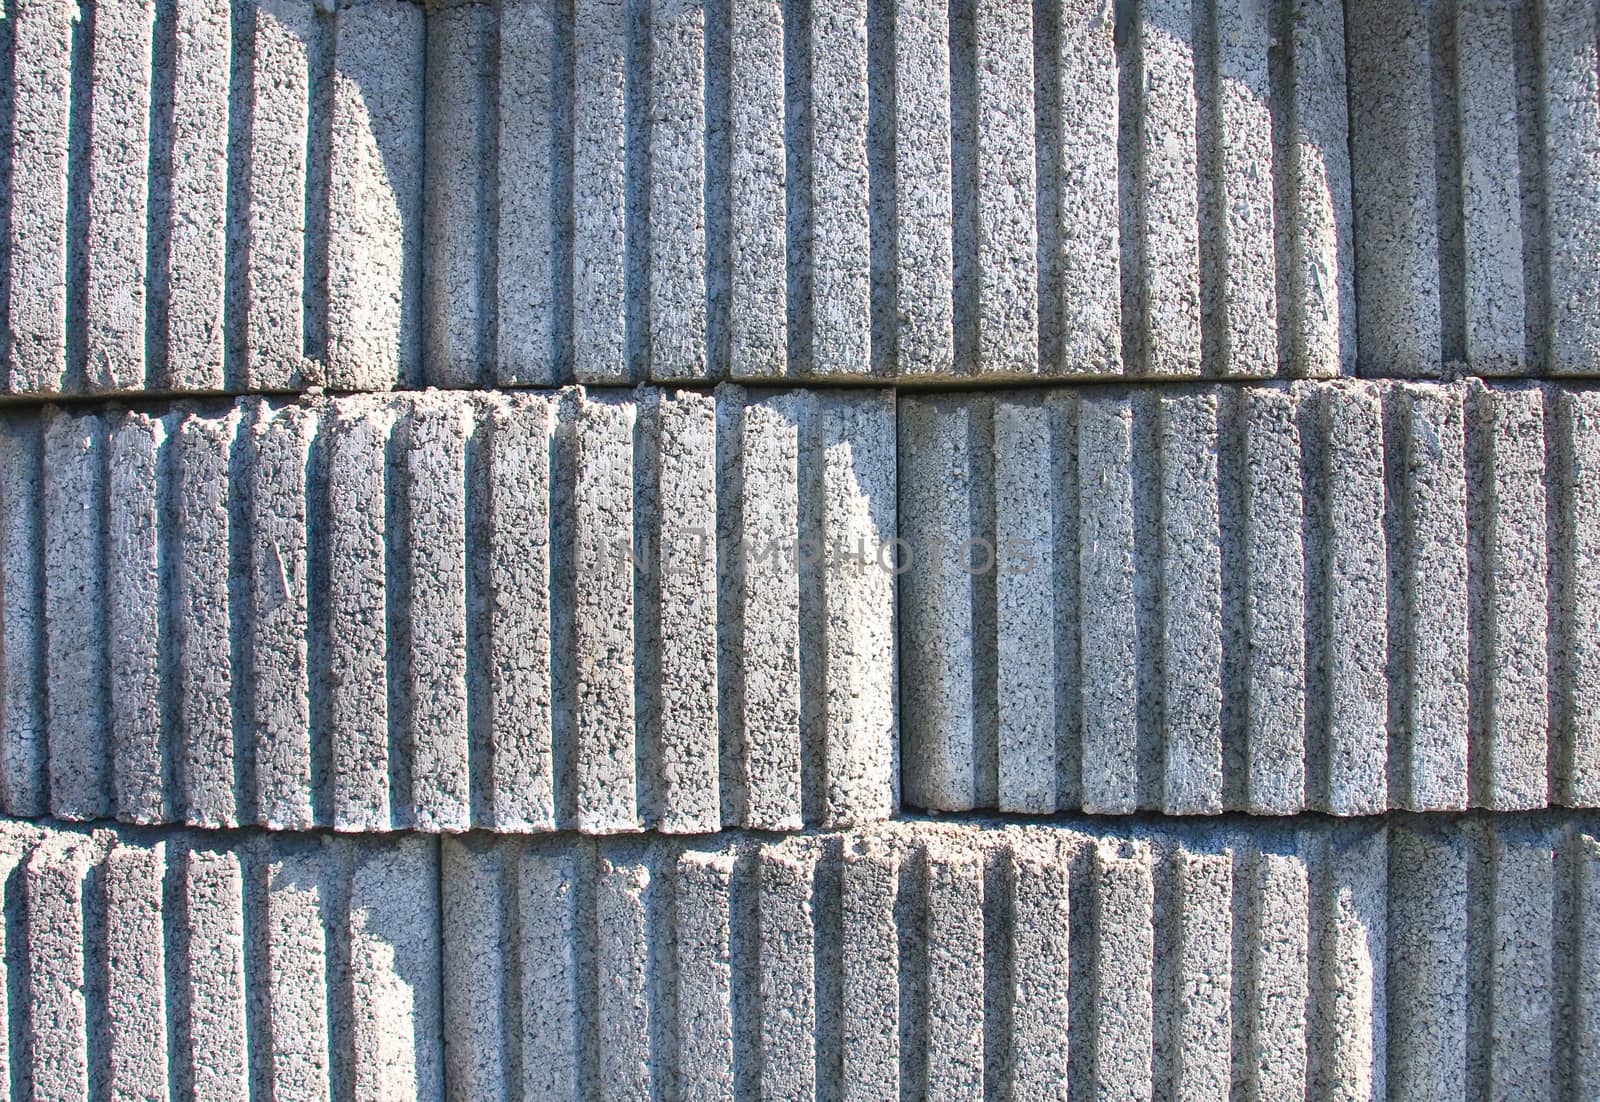 The masonry of concrete blocks by nikolpetr